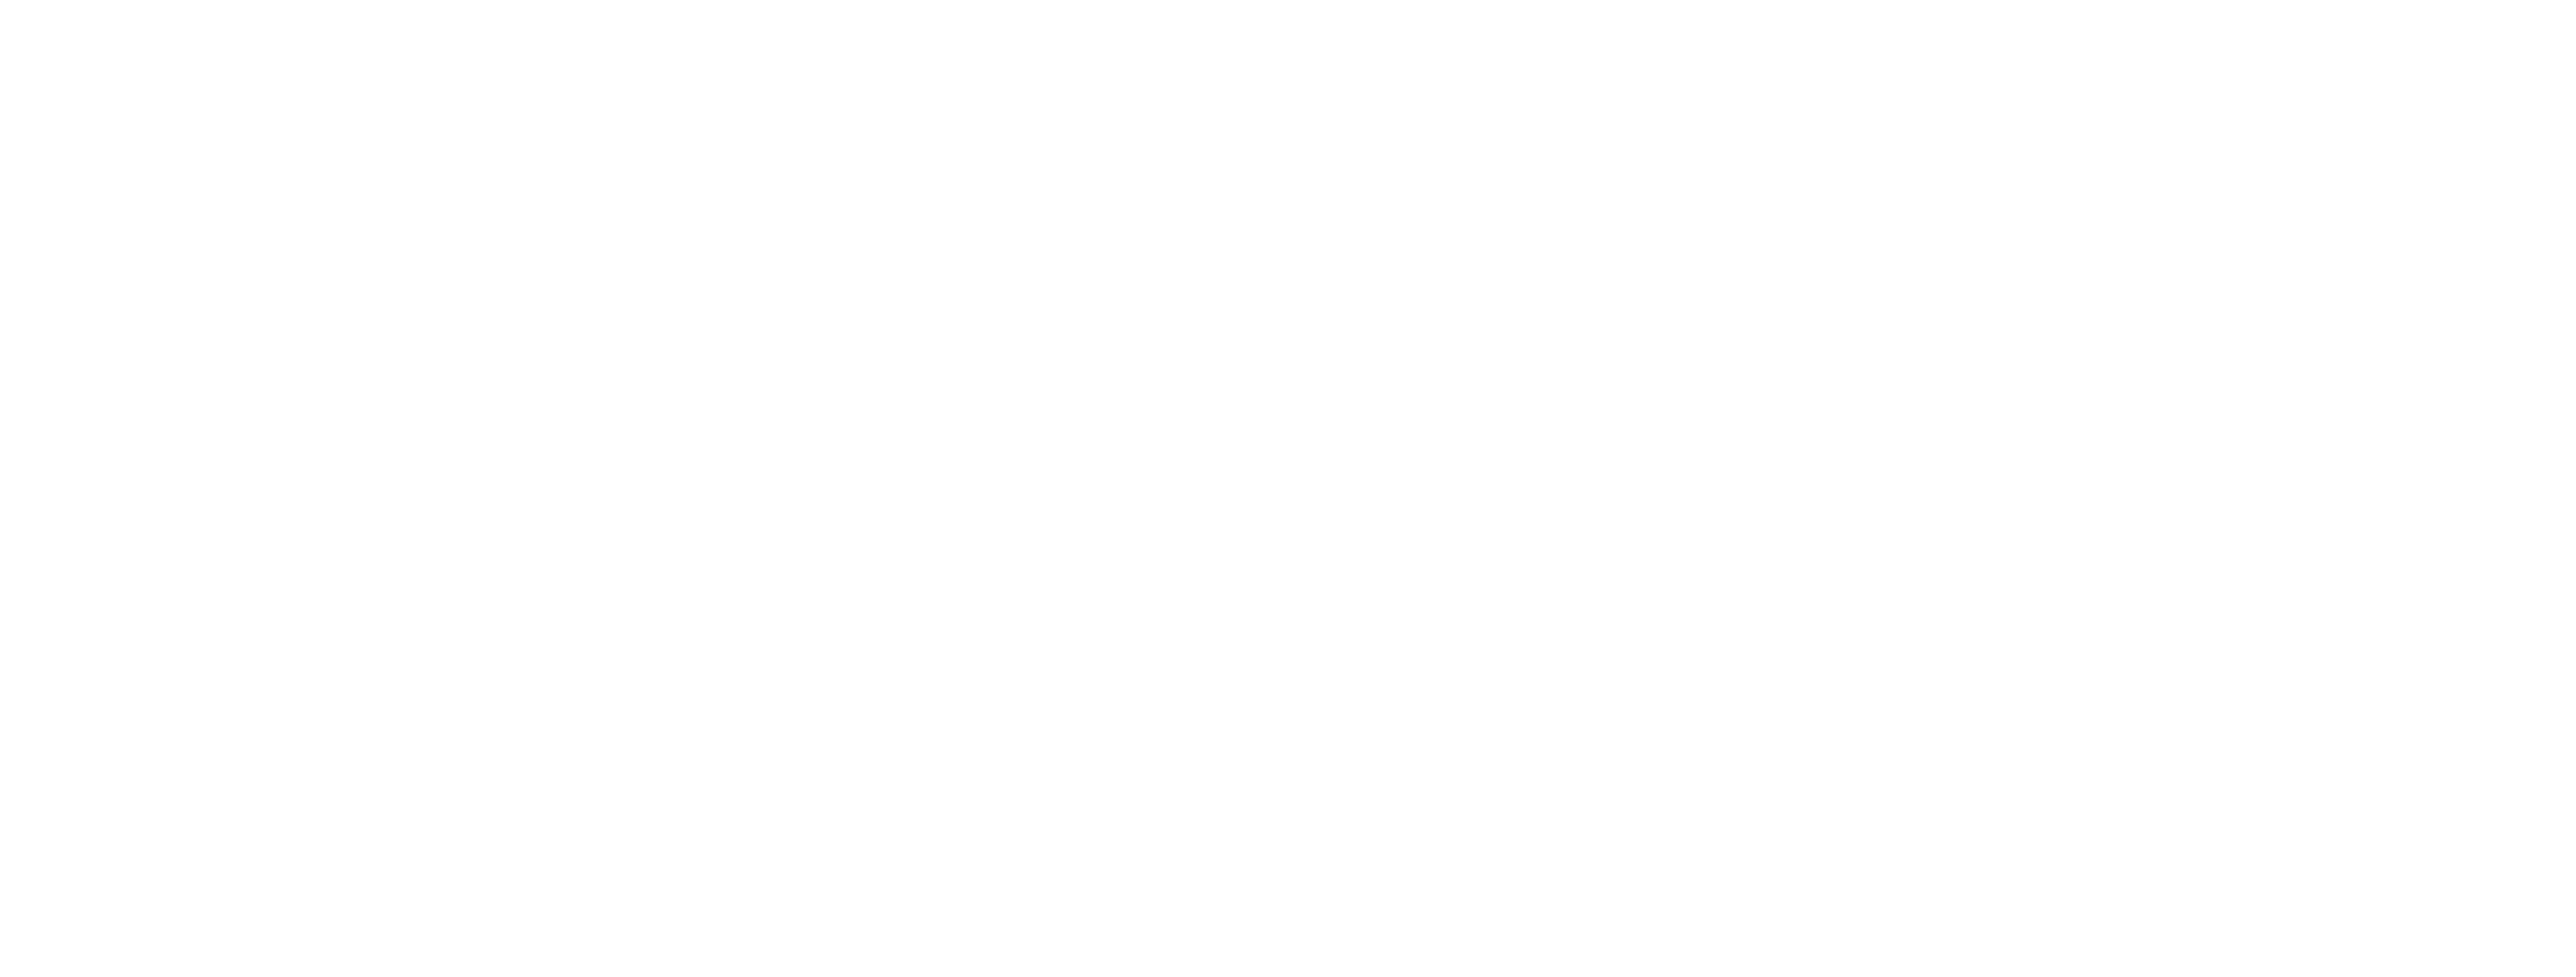 Mens Club World Championship 2022 volleyballworld